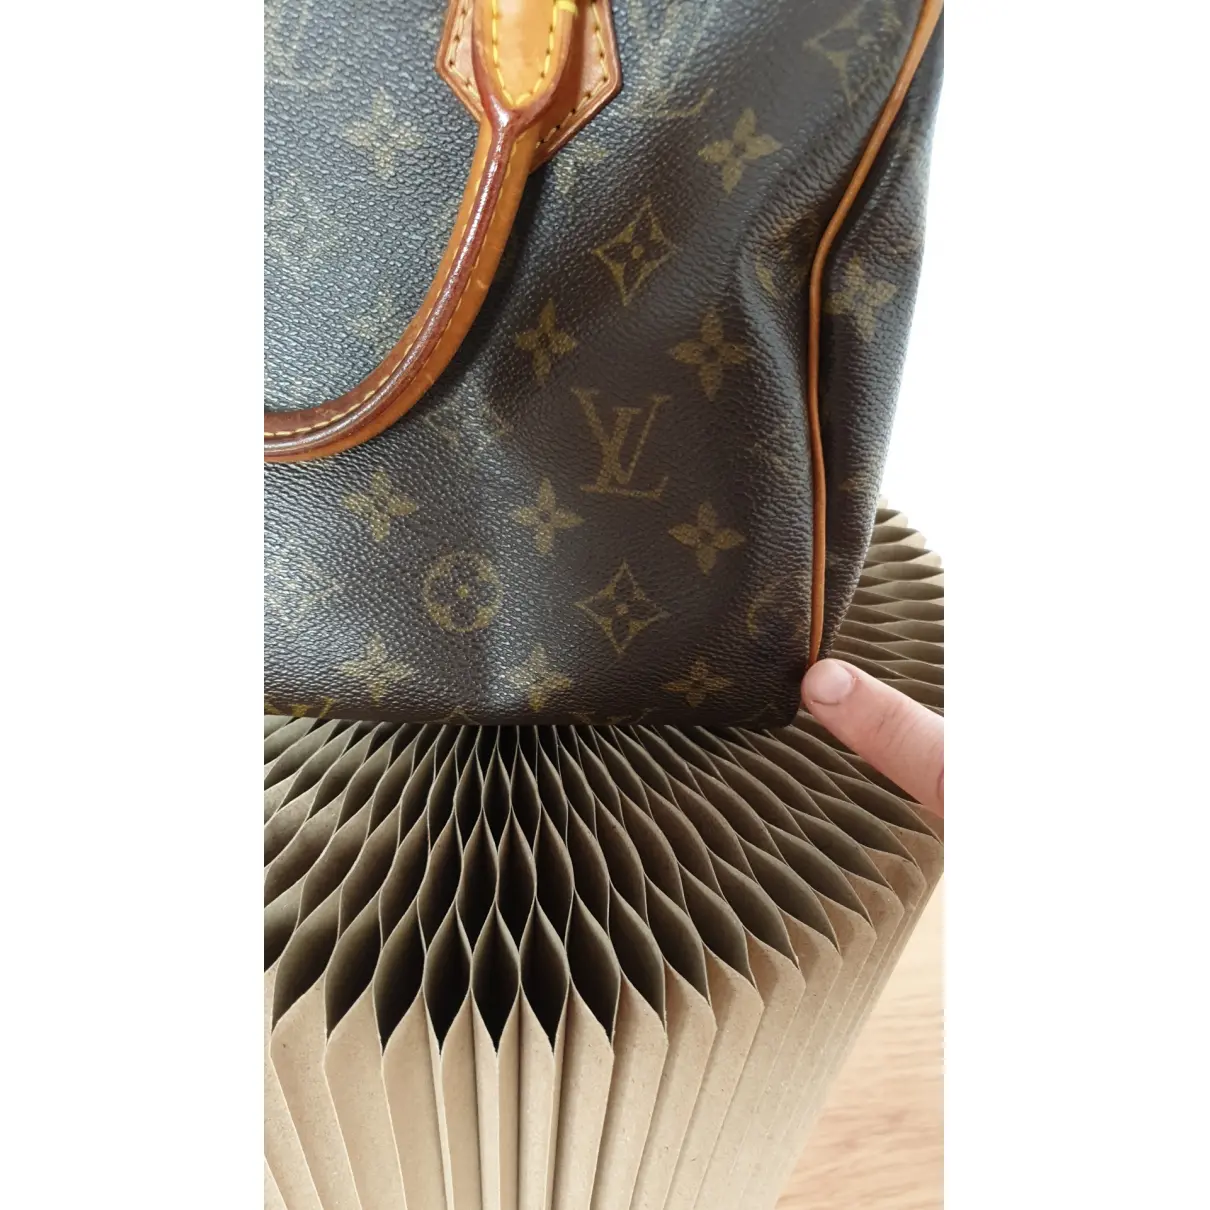 Speedy handbag Louis Vuitton - Vintage